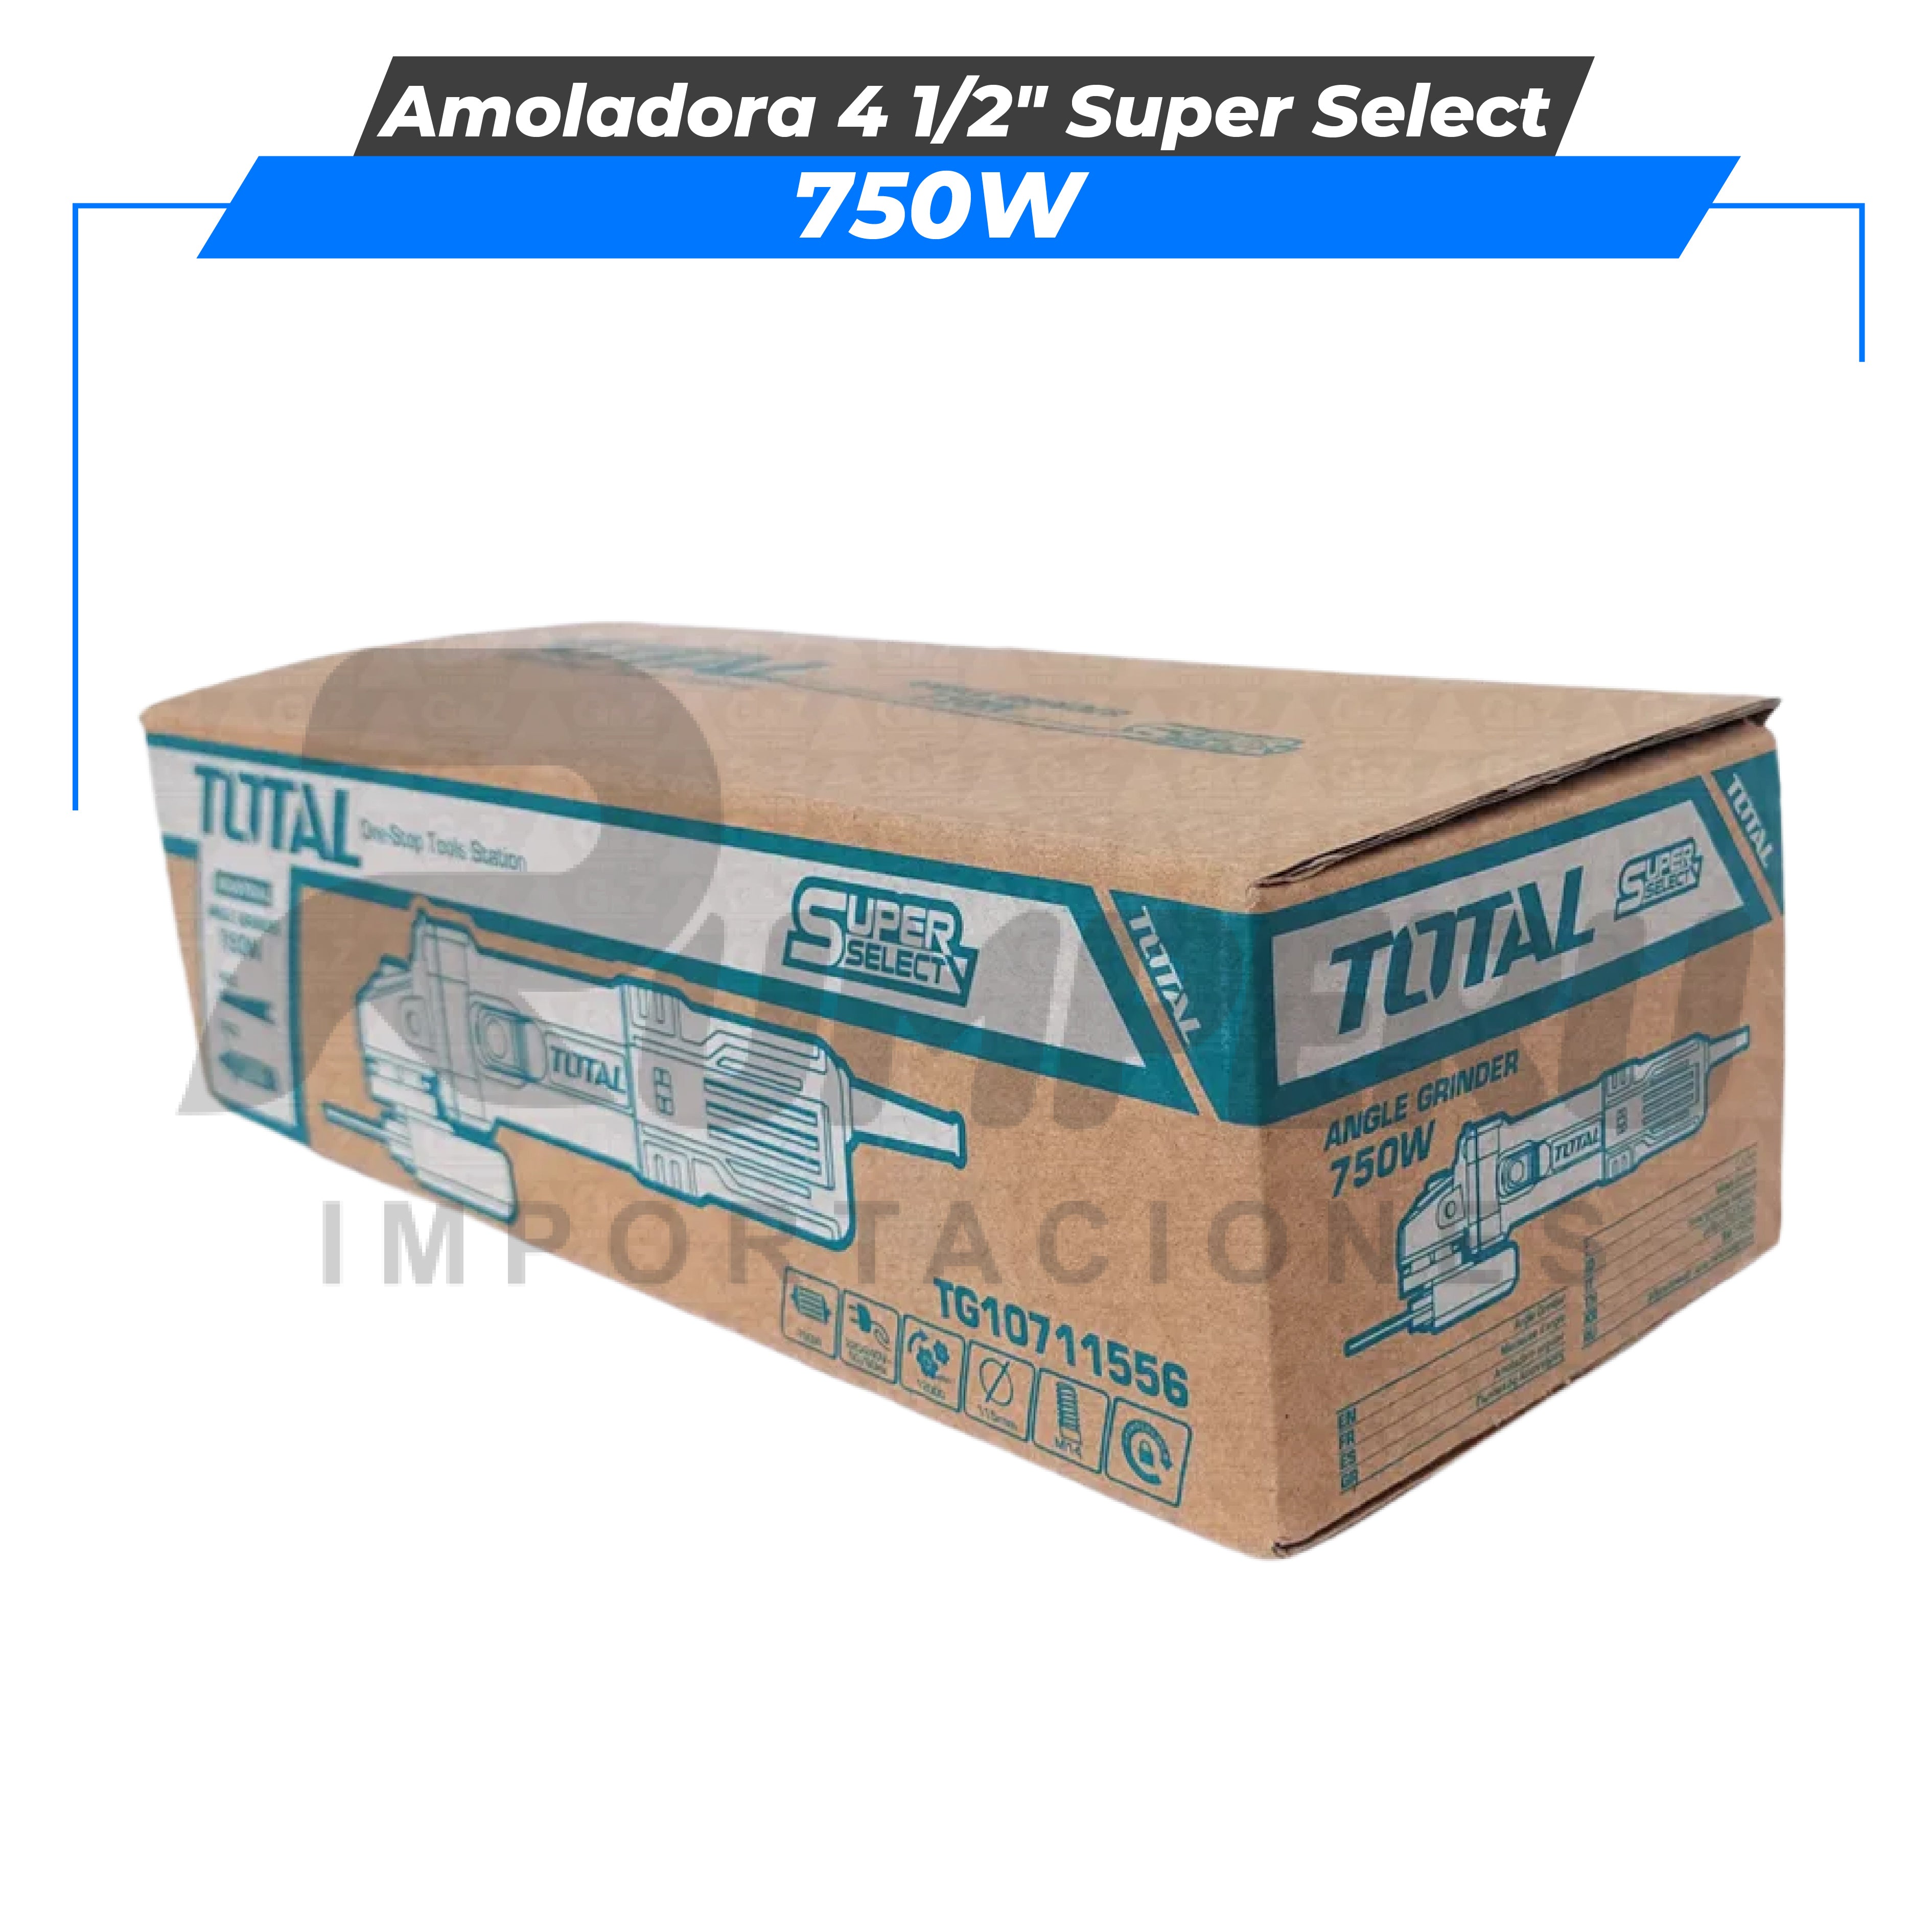 Amoladora 4 1/2" 750W SUPER SELECT